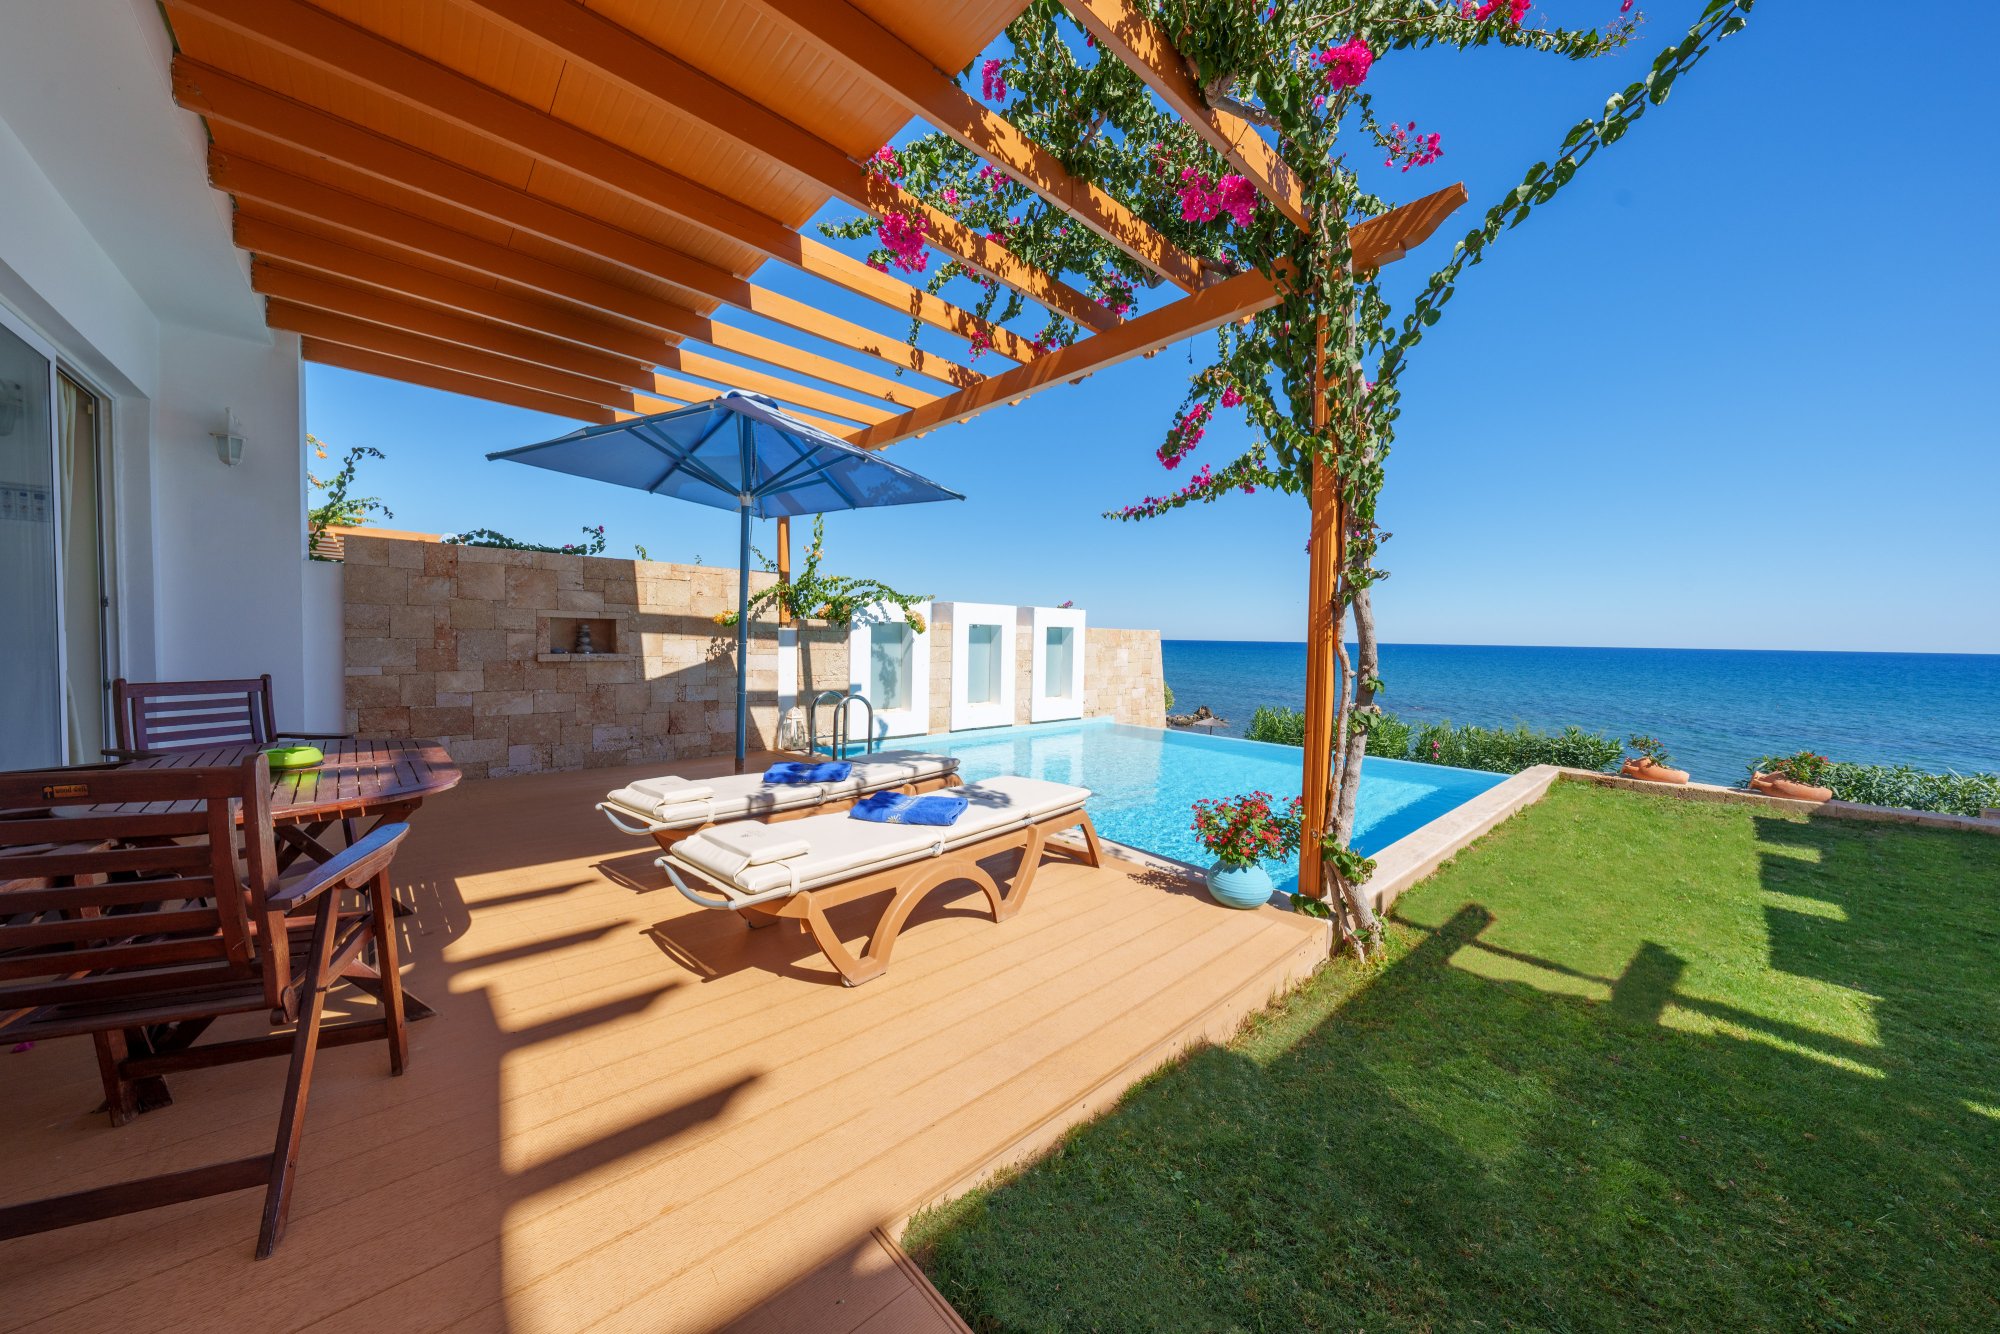 Ambassador Beach Villa Sea View with Personal Pool - 2 Bedrooms (170 sqm)_A1S2966.jpg